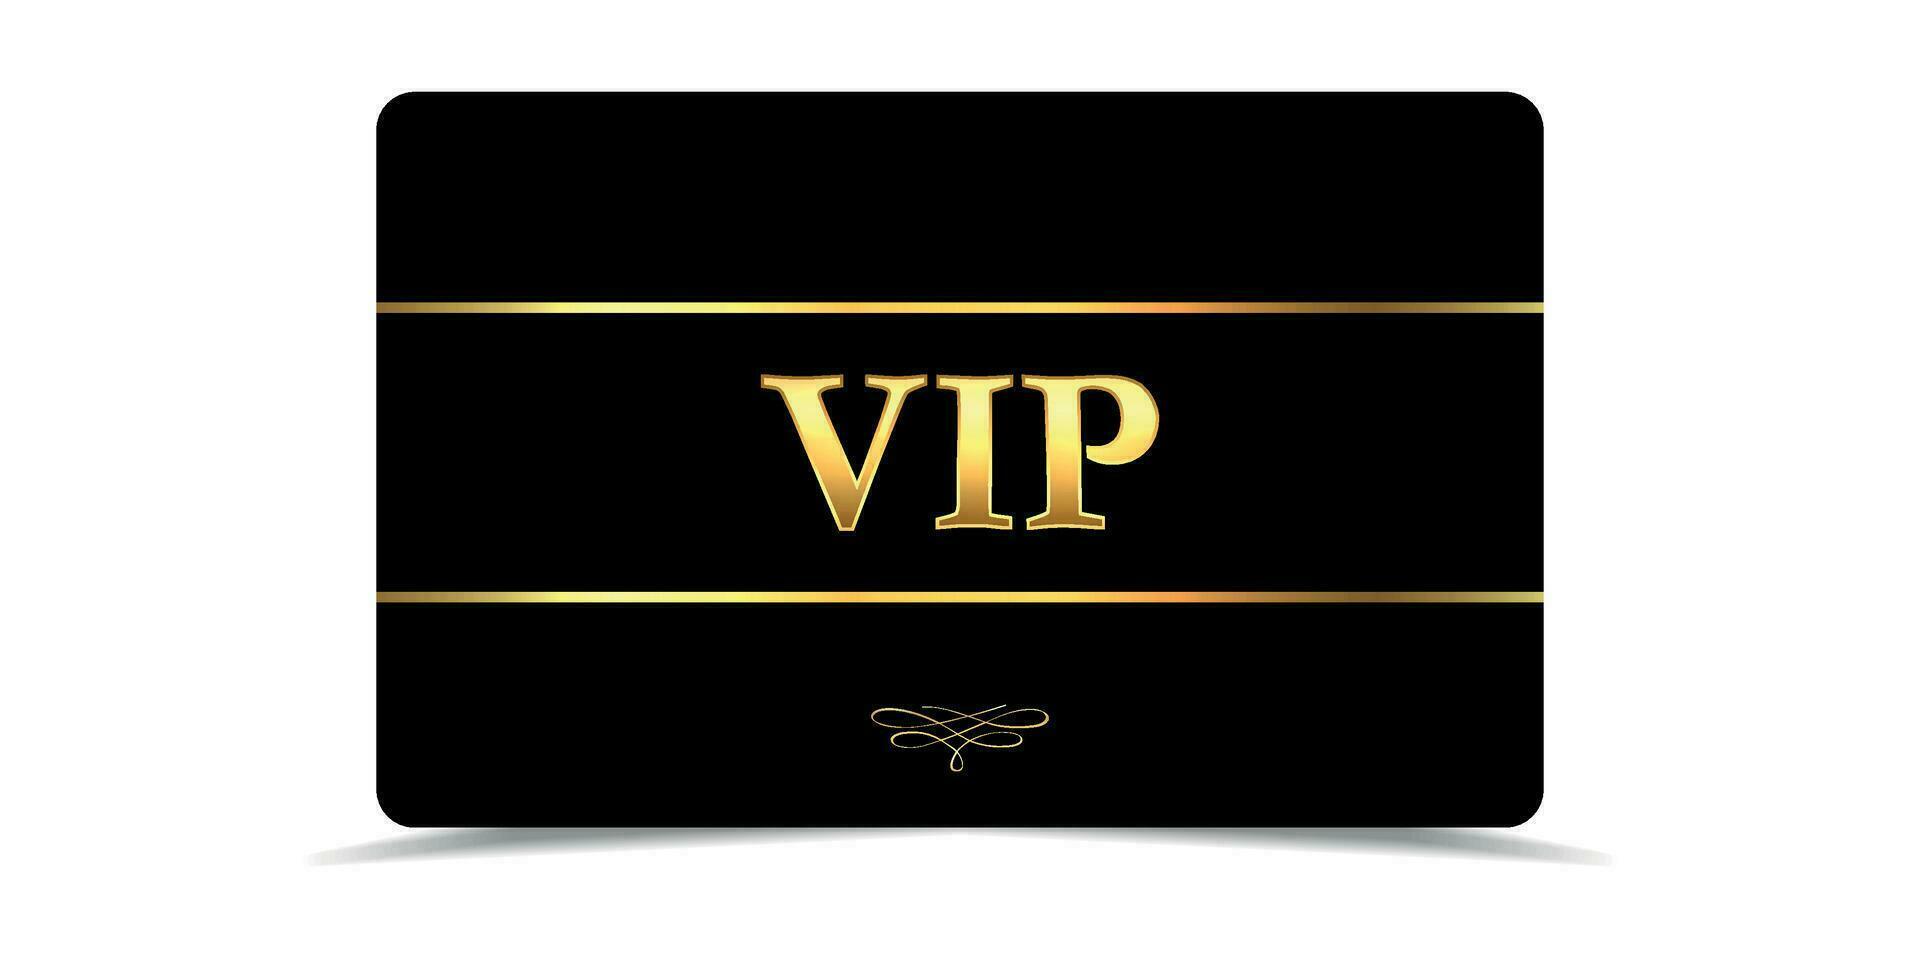 VIP.VIP Invitation.Premium card.VIP card.Luxury template design.Vip gold ticket vector